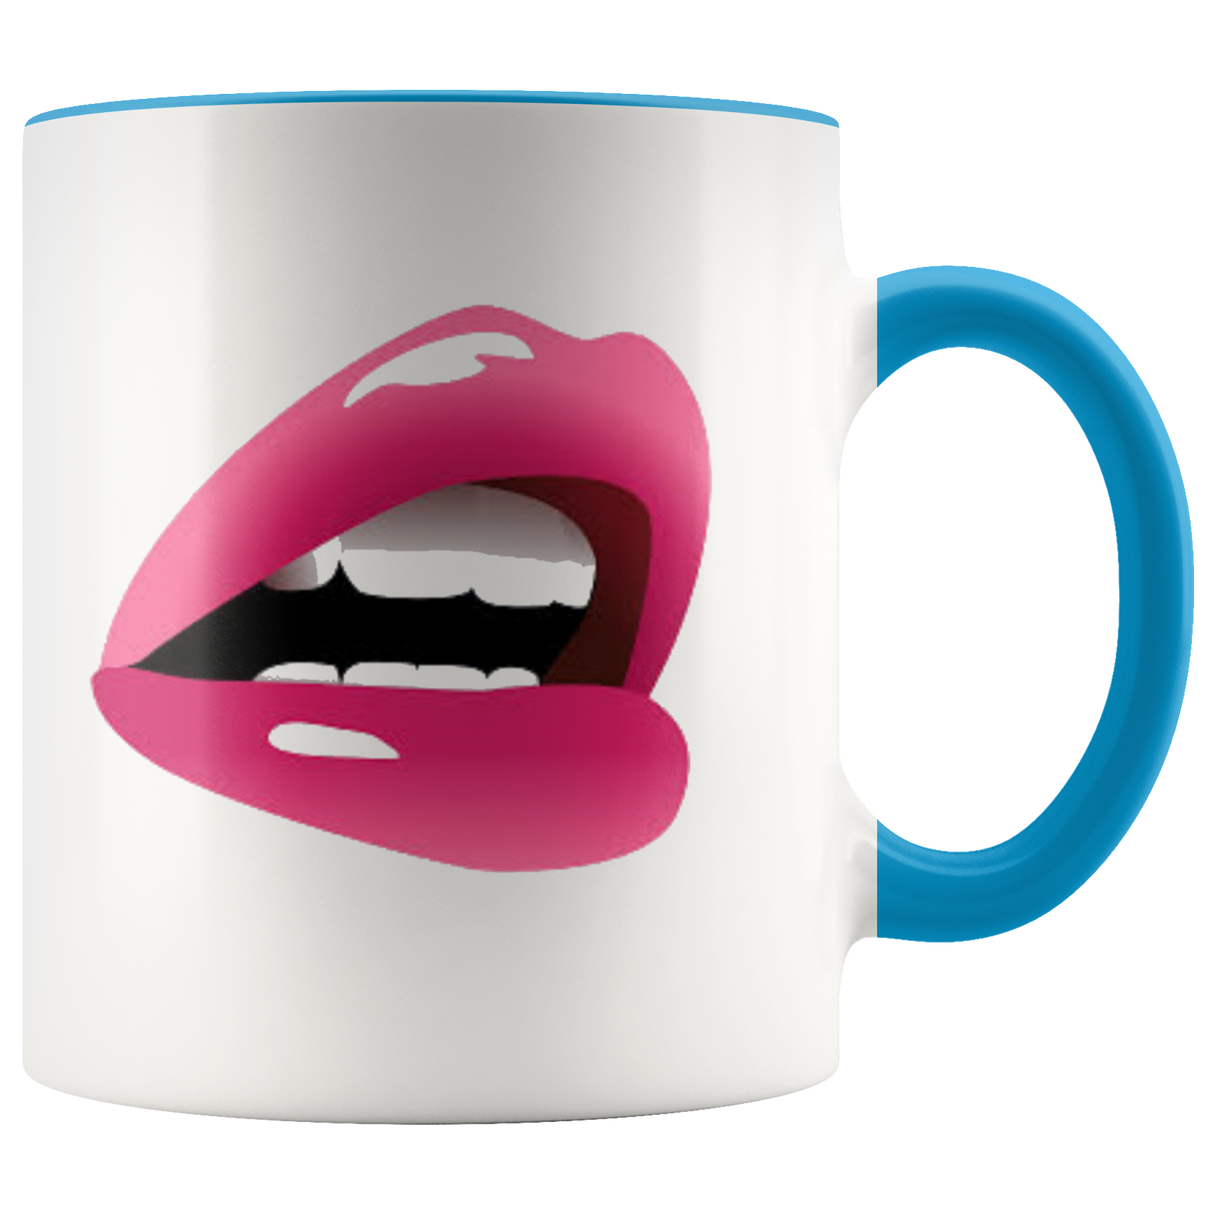 Mug Sassy Mouth Ceramic Accent Mug - Blue | Shop Sassy Chick